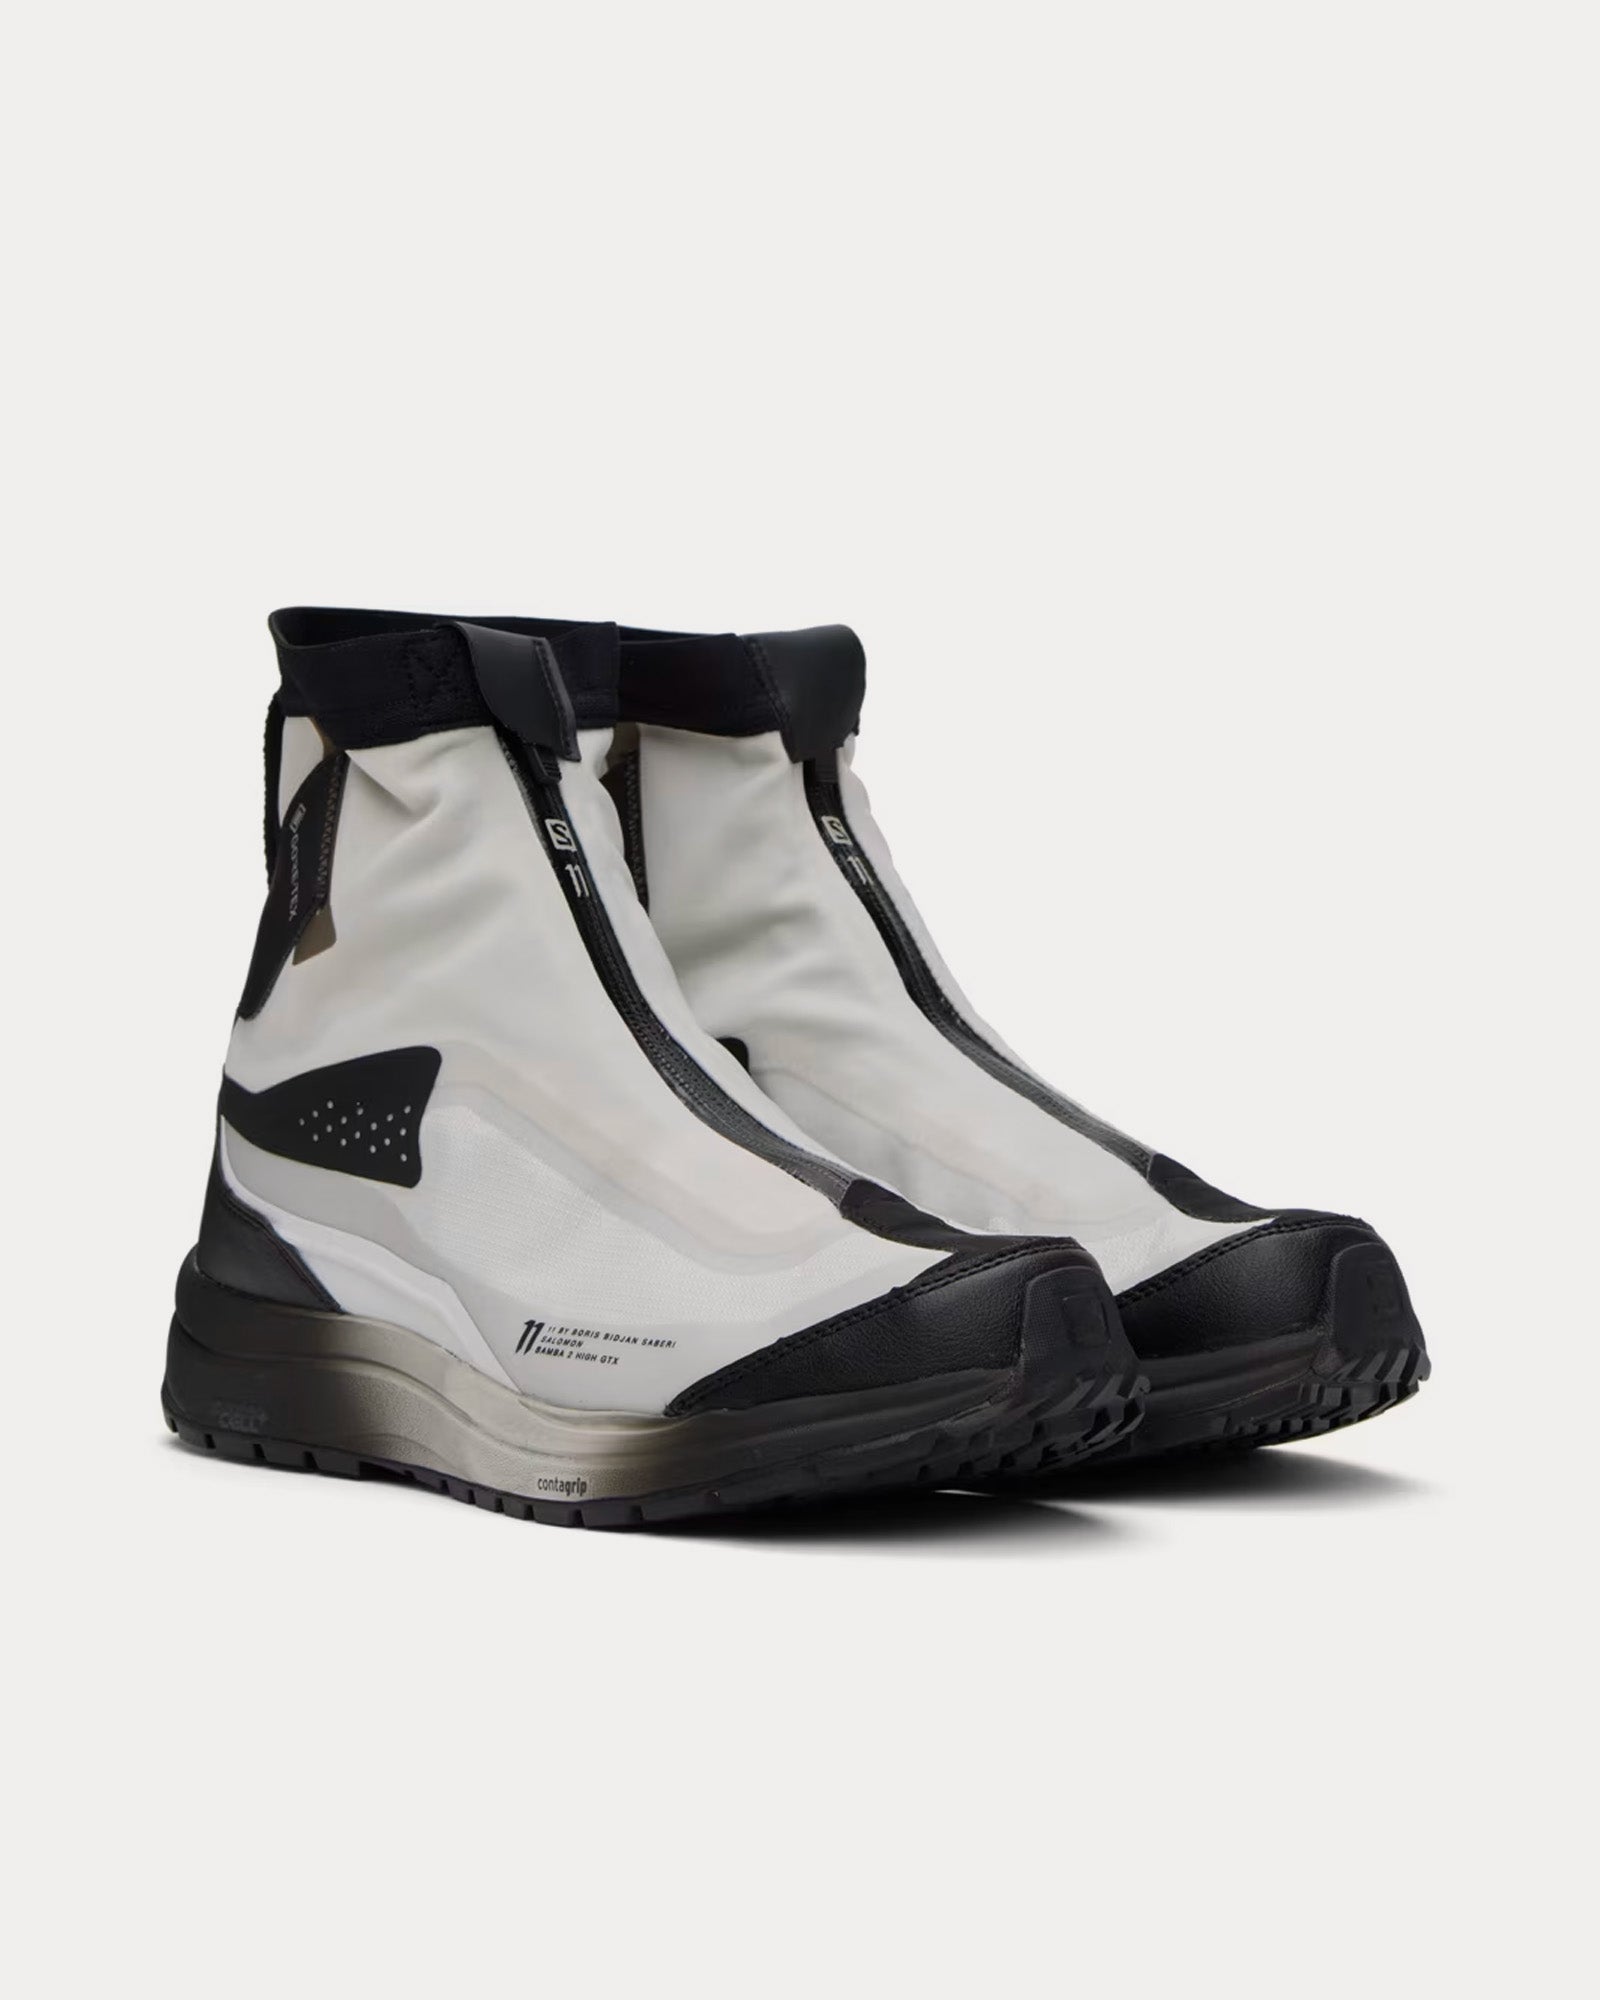 Salomon x 11 By Boris Bidjan Saberi - Bamba 2 Gore-Tex Black / White High Top Sneakers